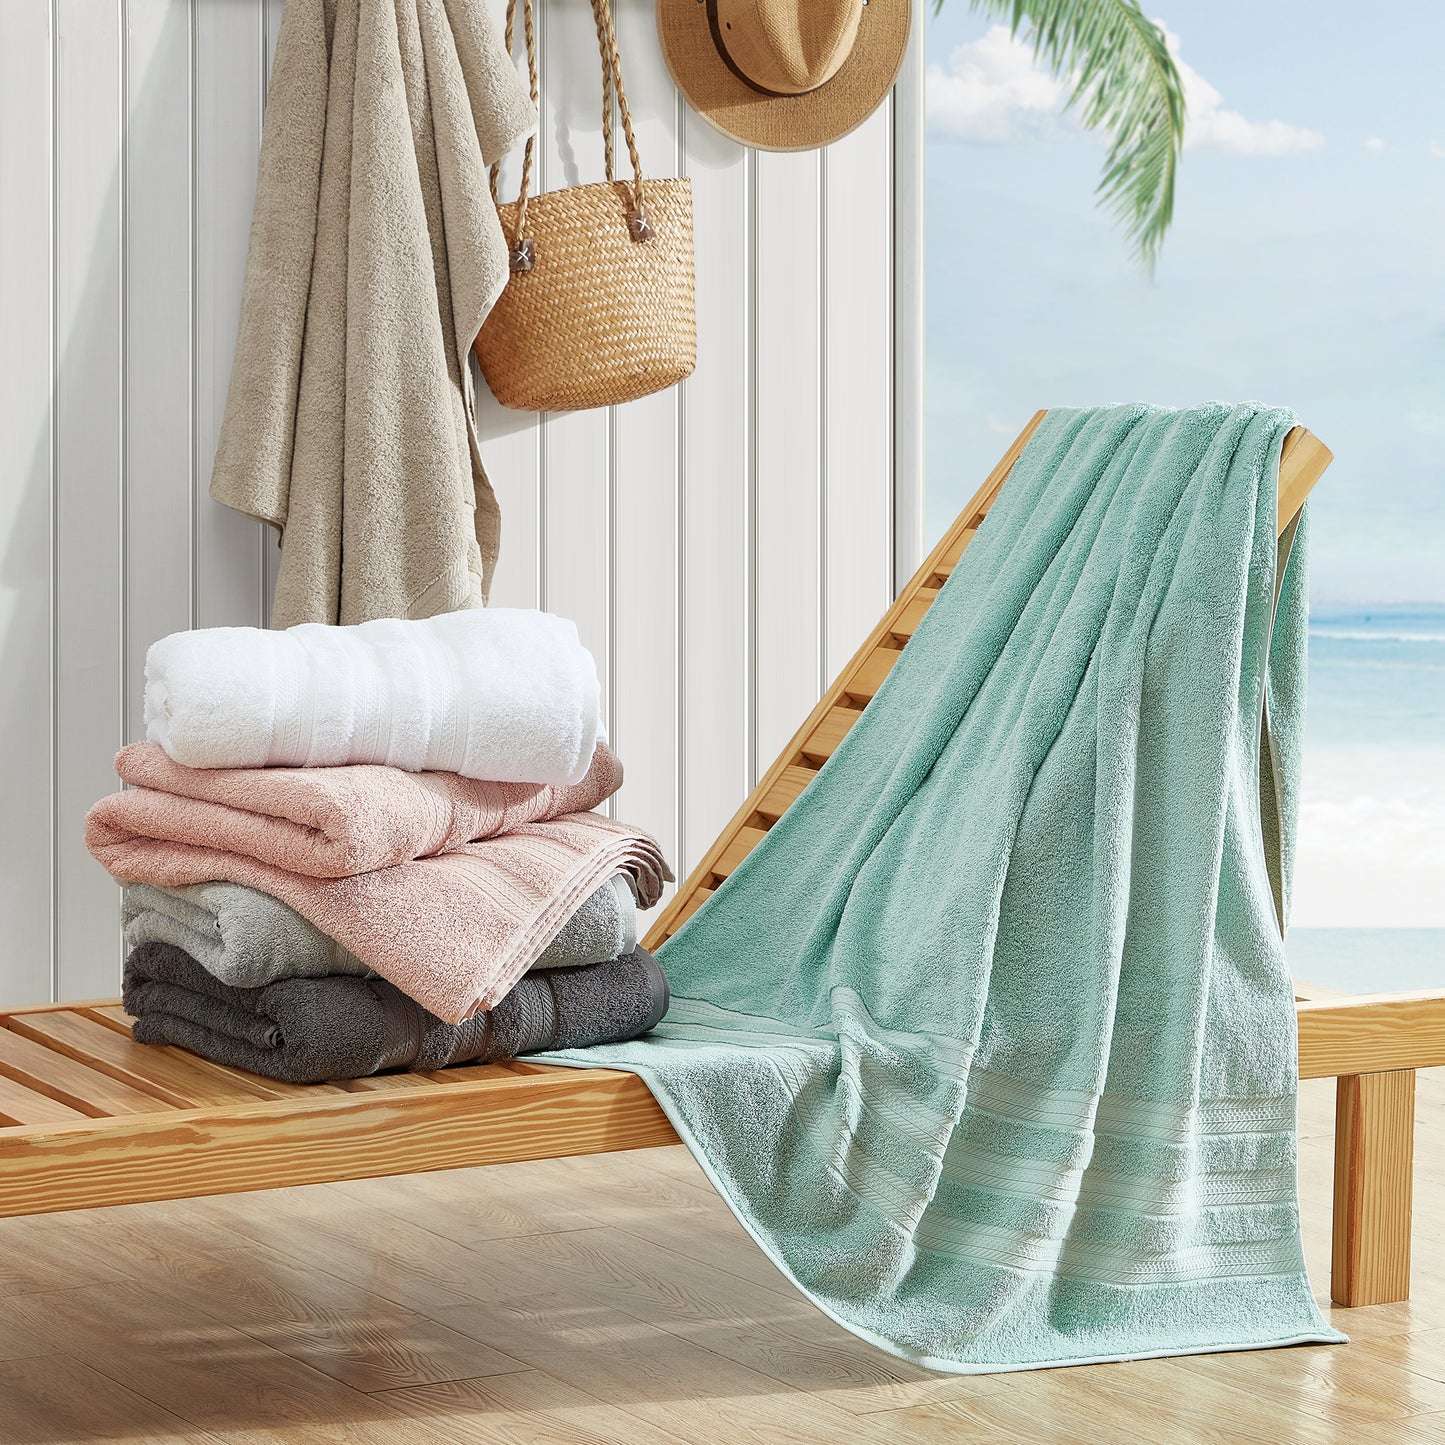 Inyahome Extra Large 90x180cm 40x80cm Bath Towels Bathroom Set Cotton Bath  Sheet Luxury Hotel Spa Towels For Home Beach Towels